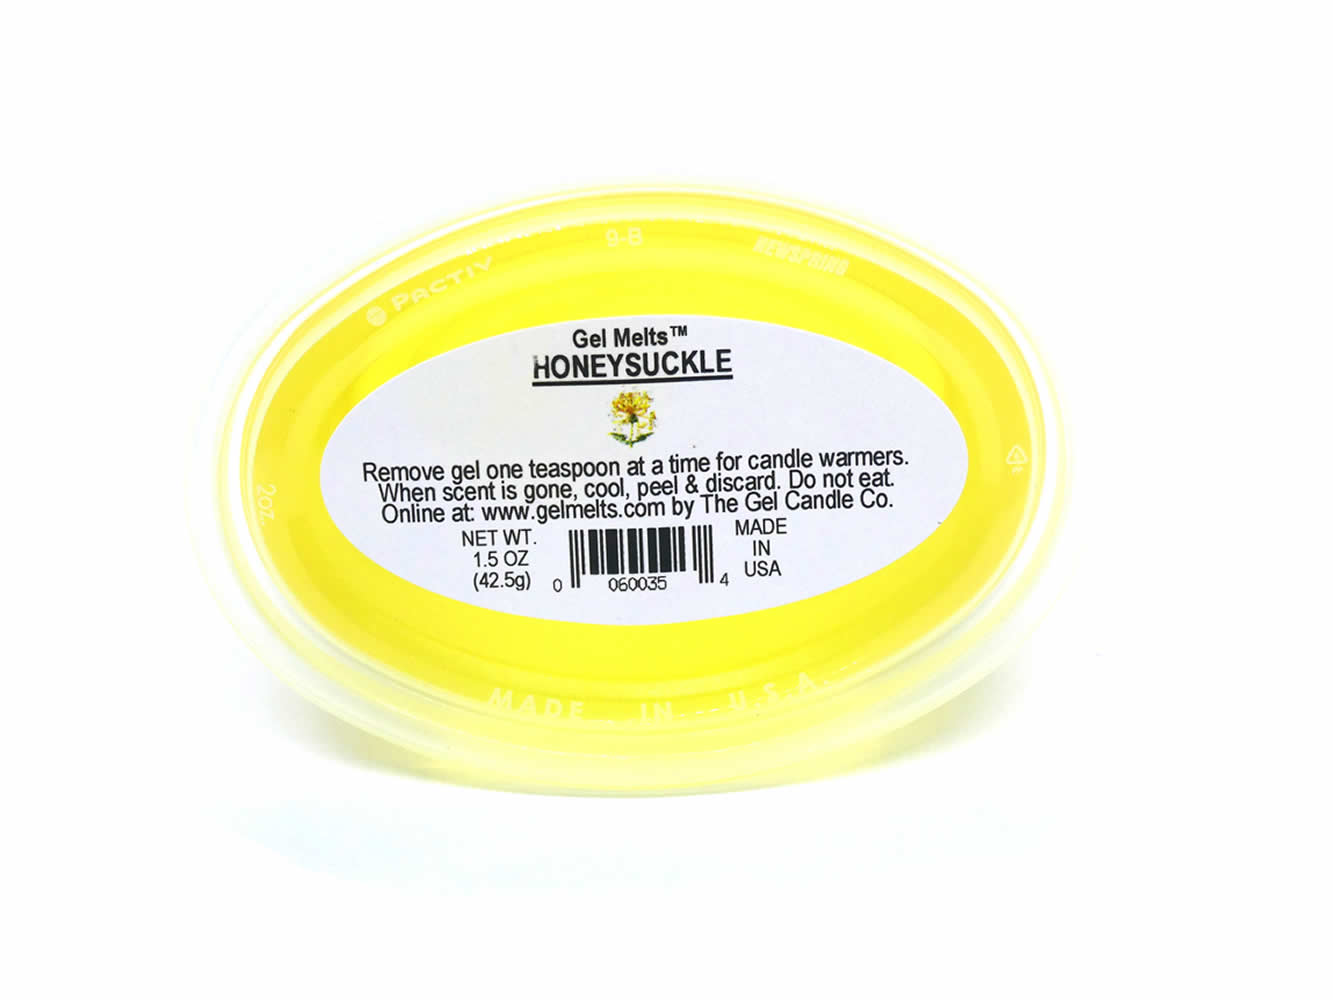 Honeysuckle scented Gel Melts™ Gel Wax for warmers - 3 pack